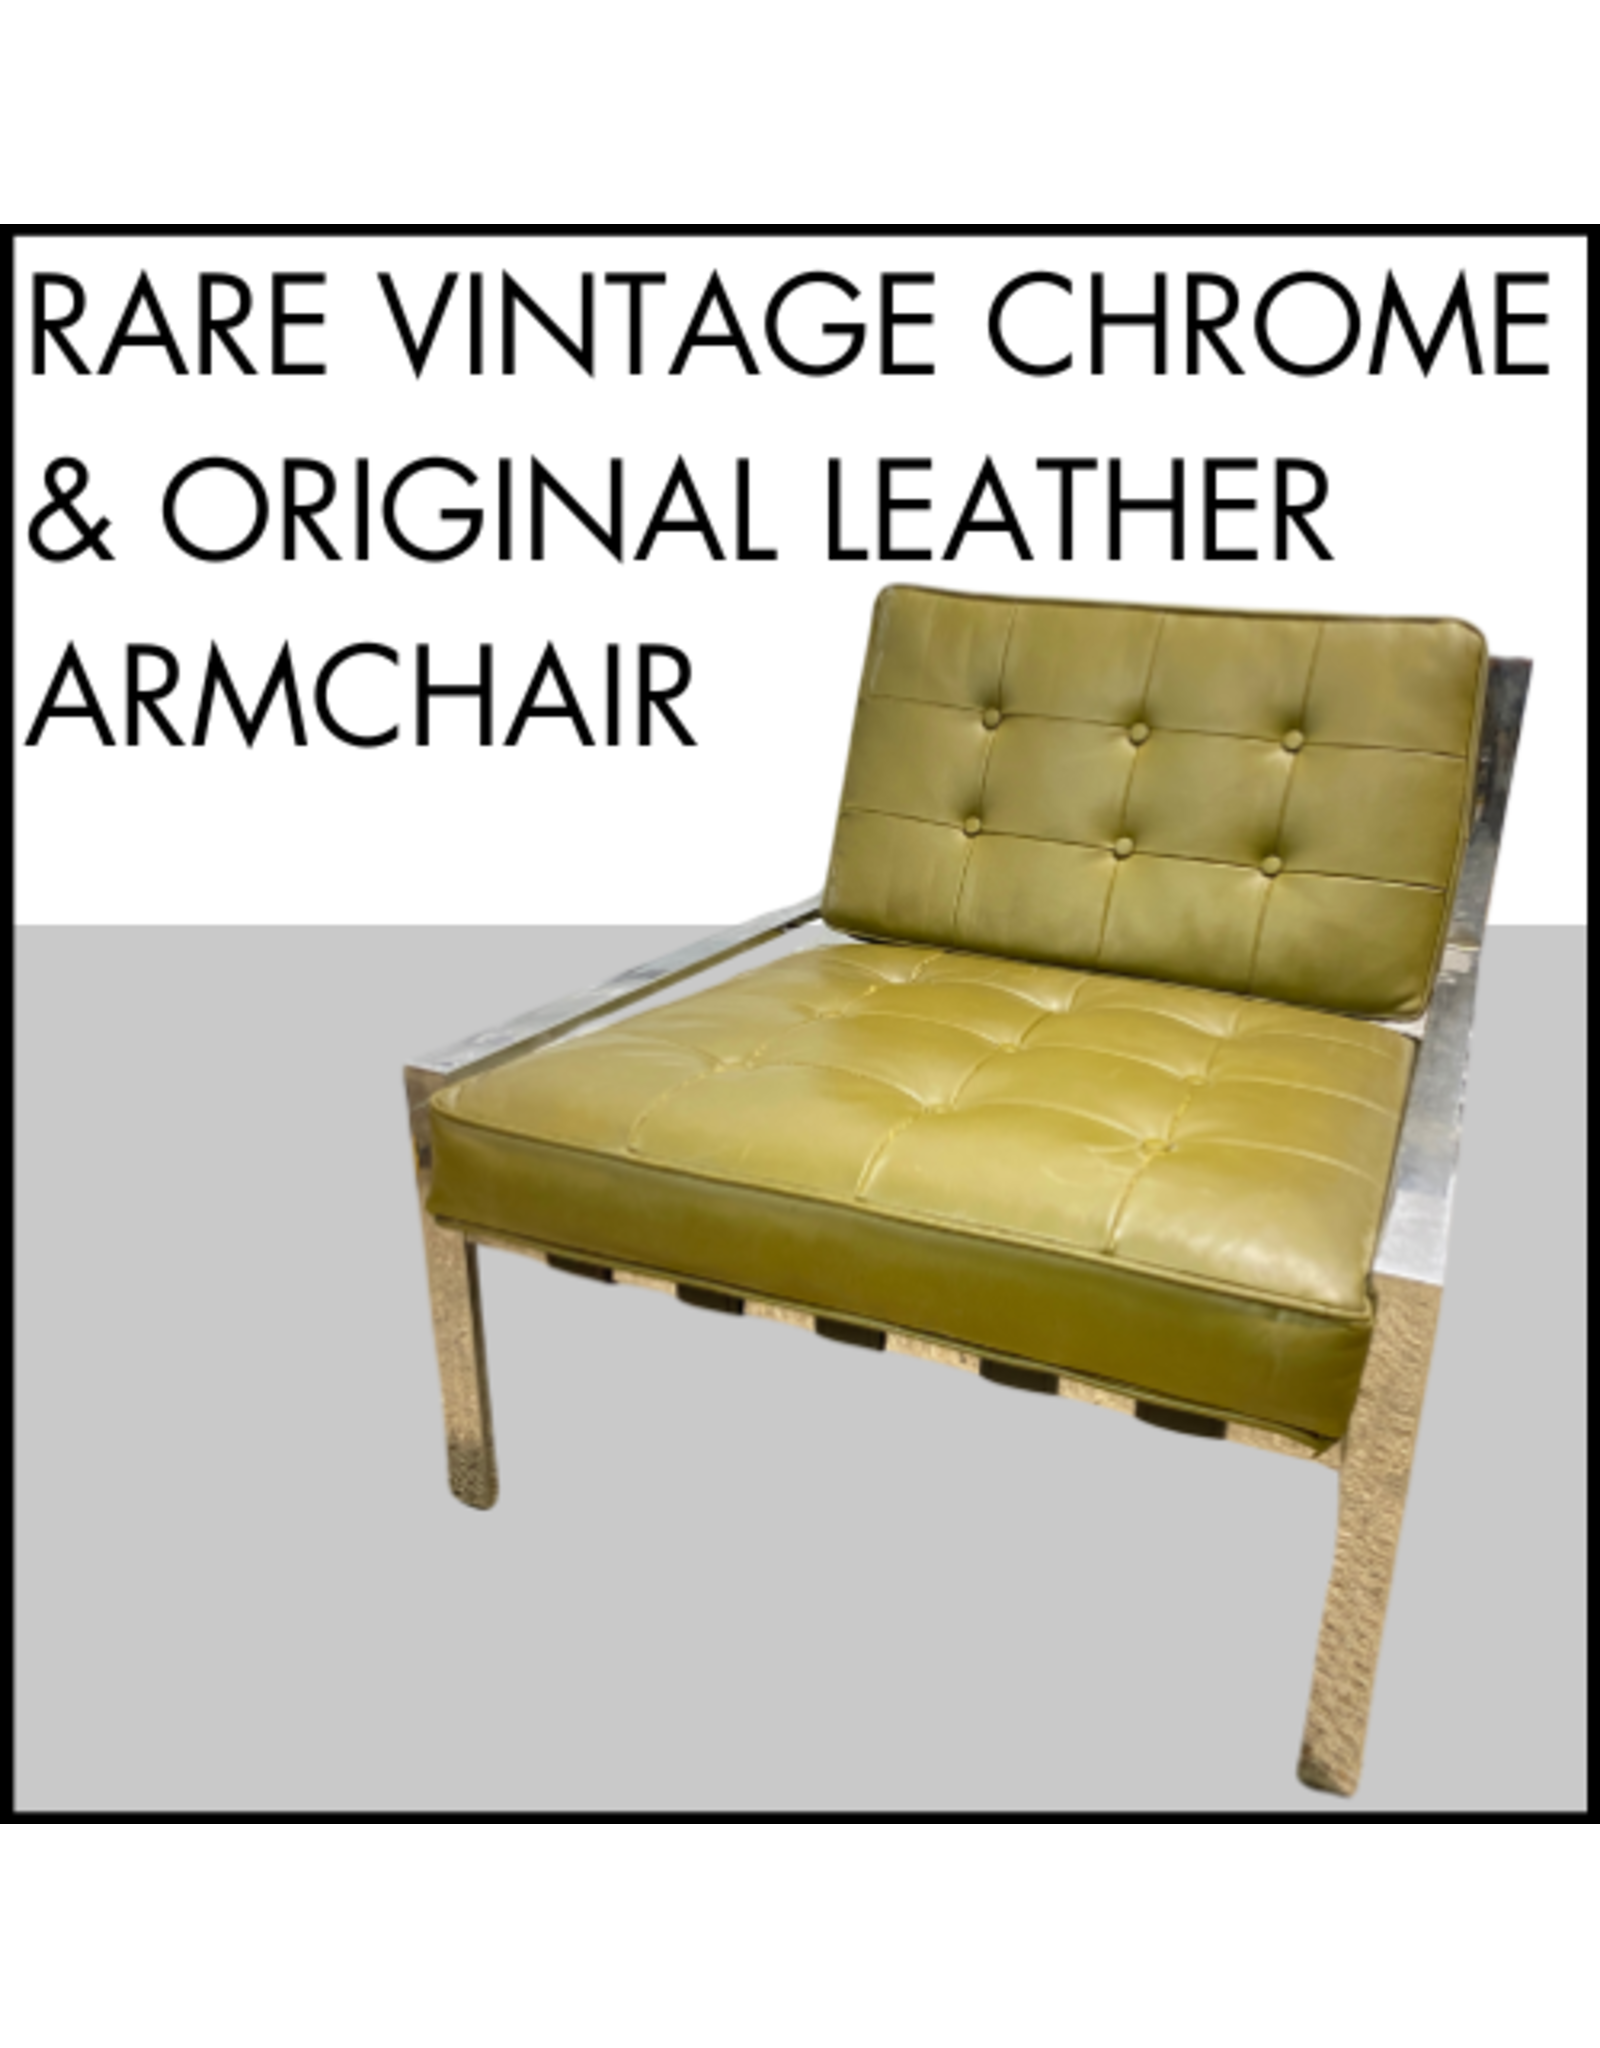 Rare Vintage Chrome & Original Leather Armchair